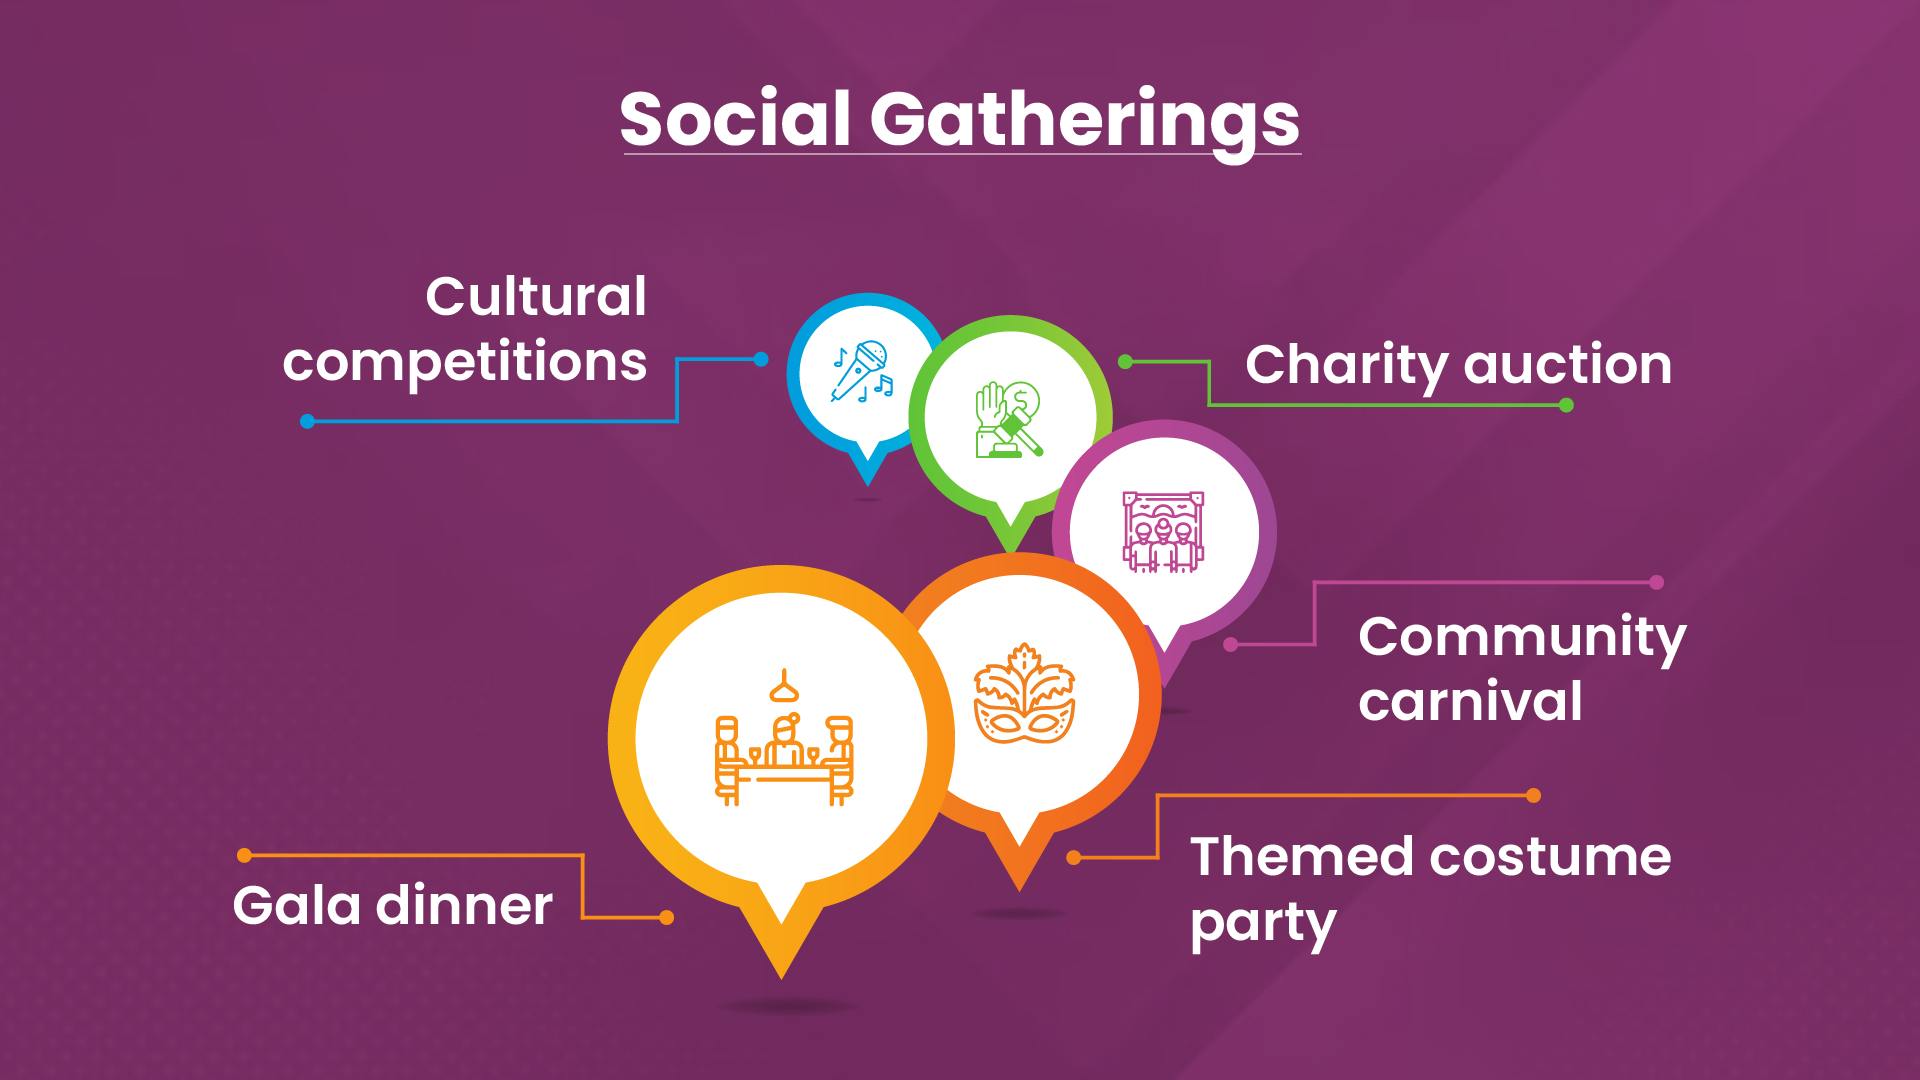 Category 1 - Social gatherings